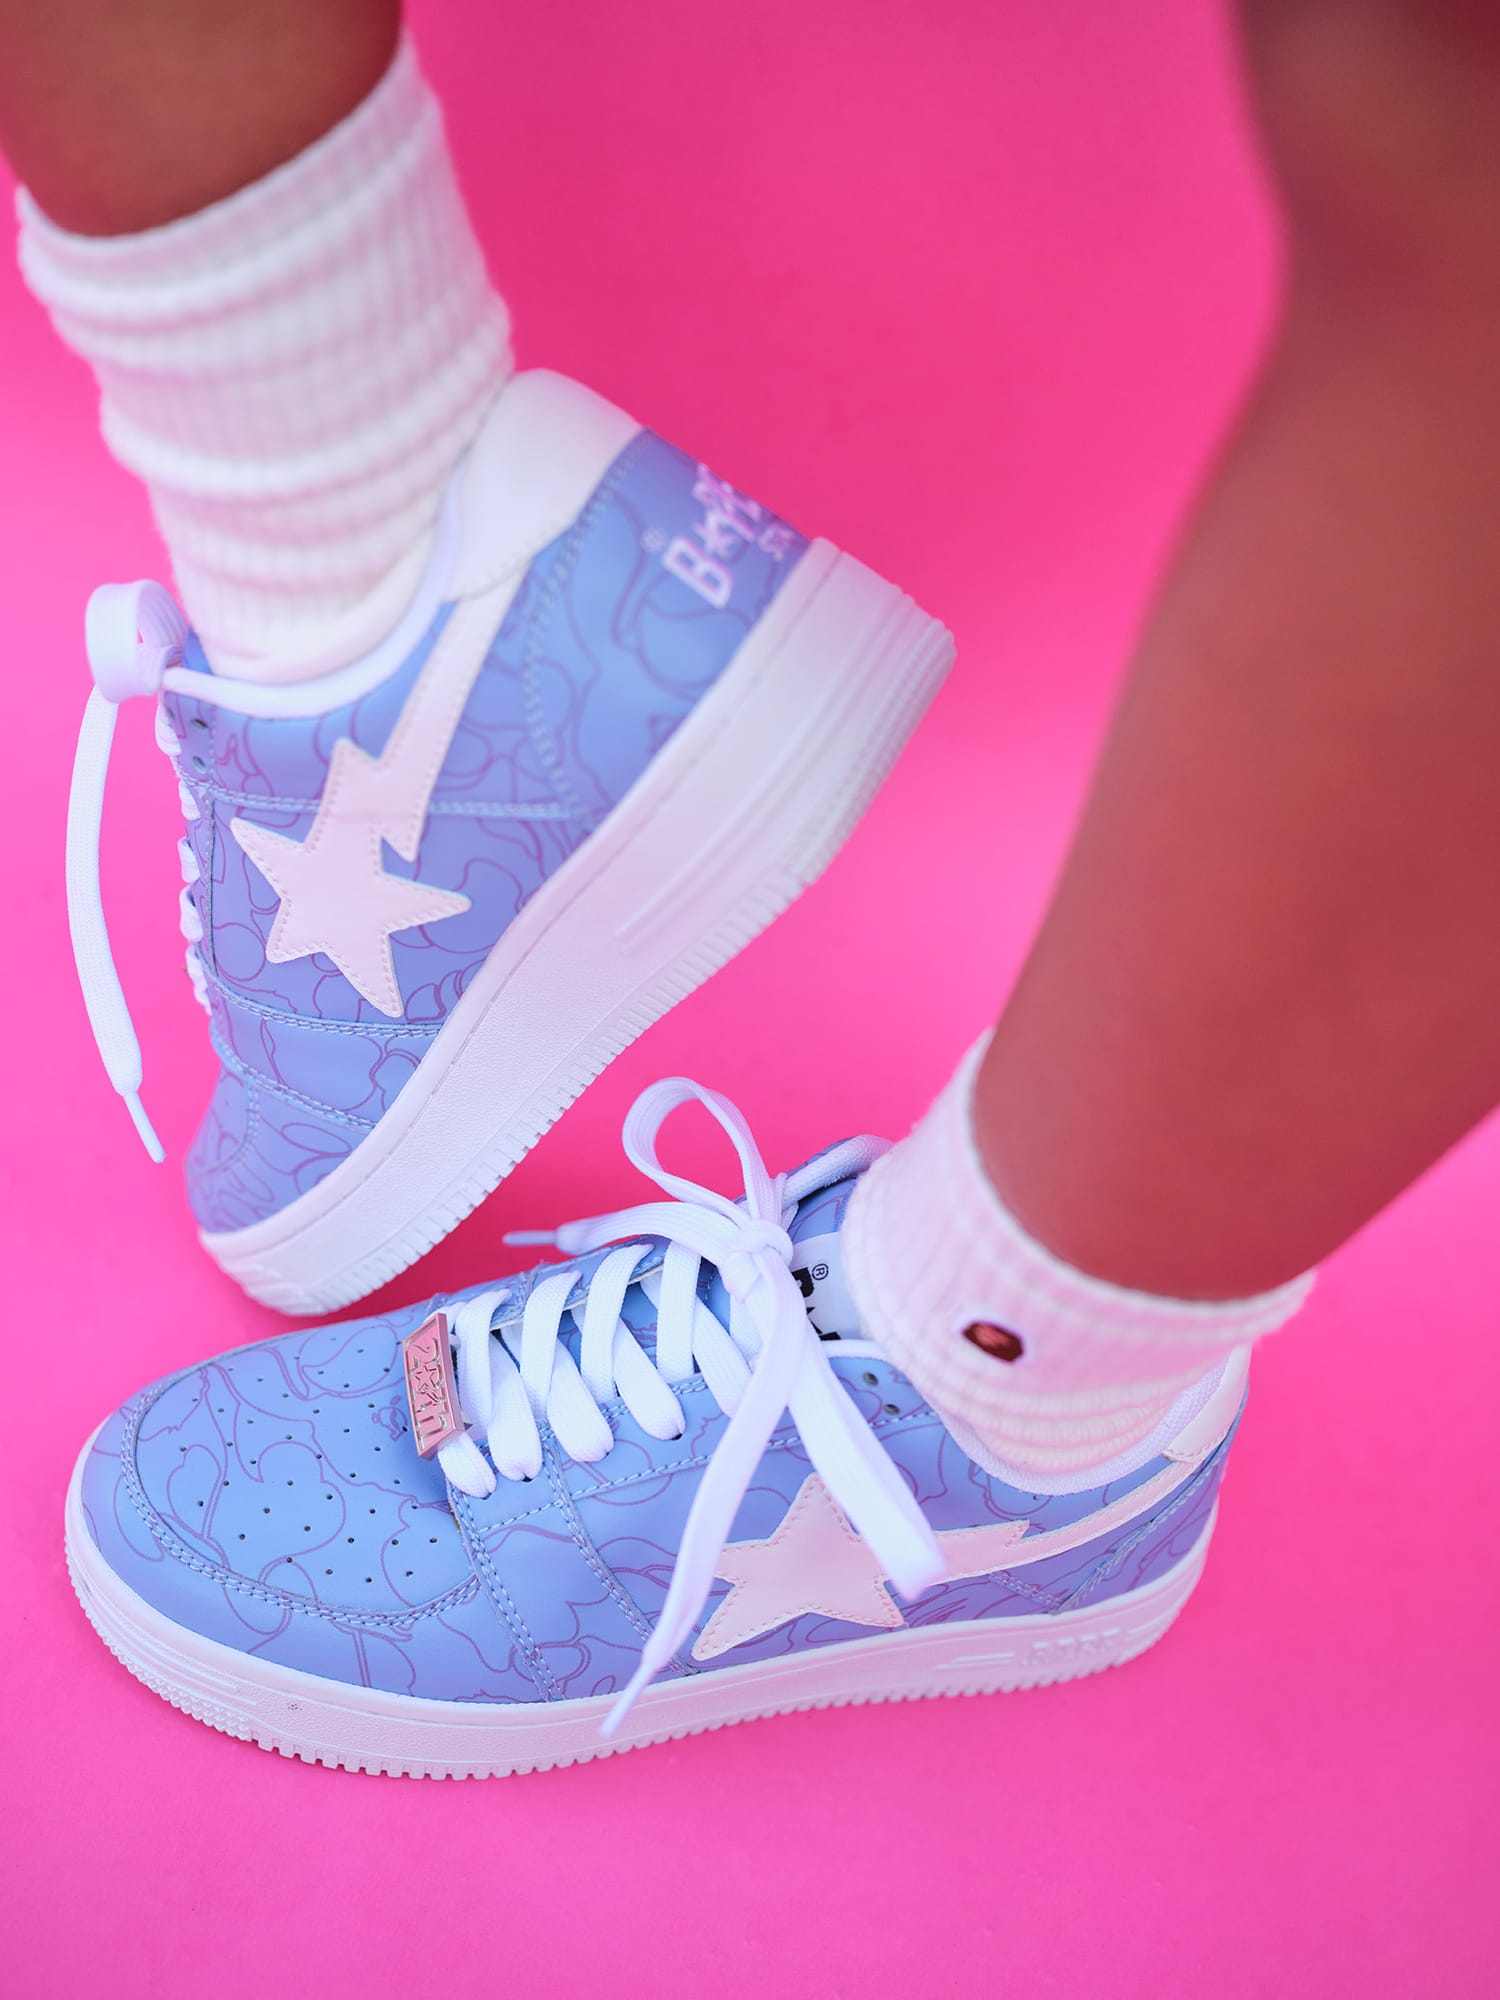 bape star shoes